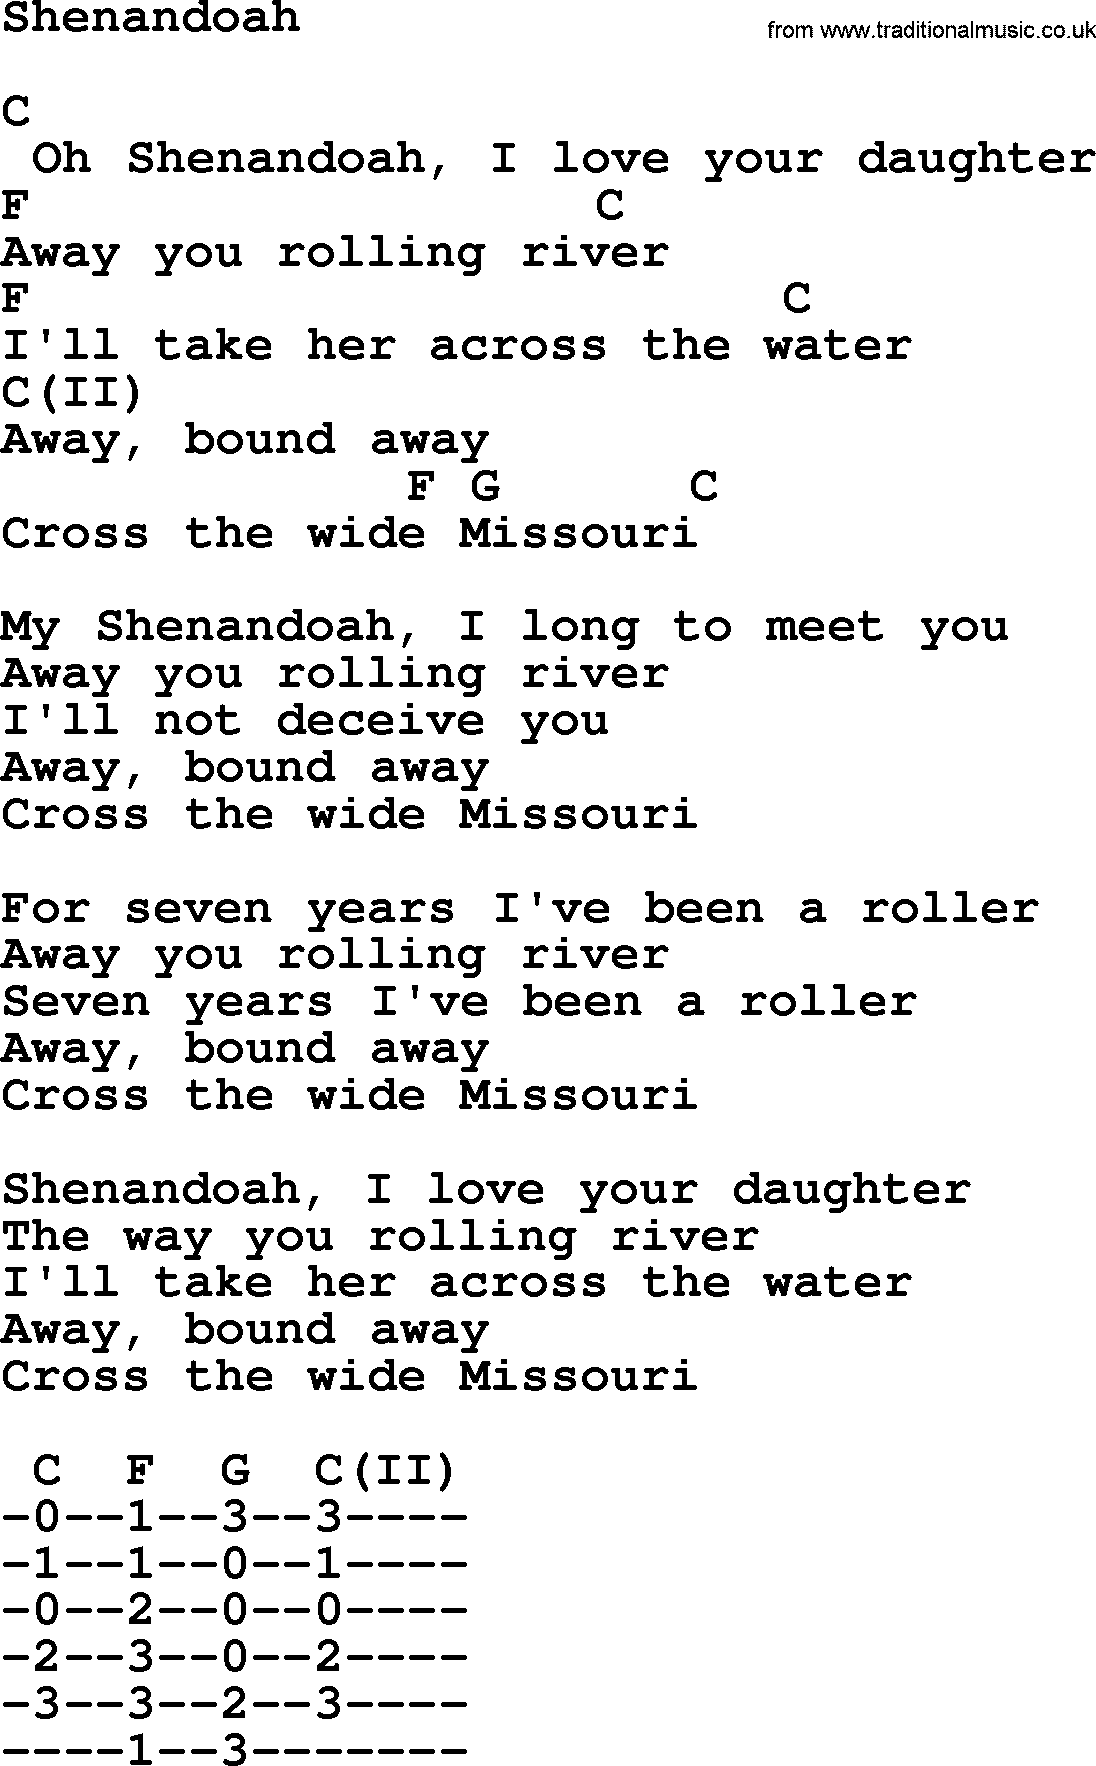 Bruce Springsteen song: Shenandoah, lyrics and chords